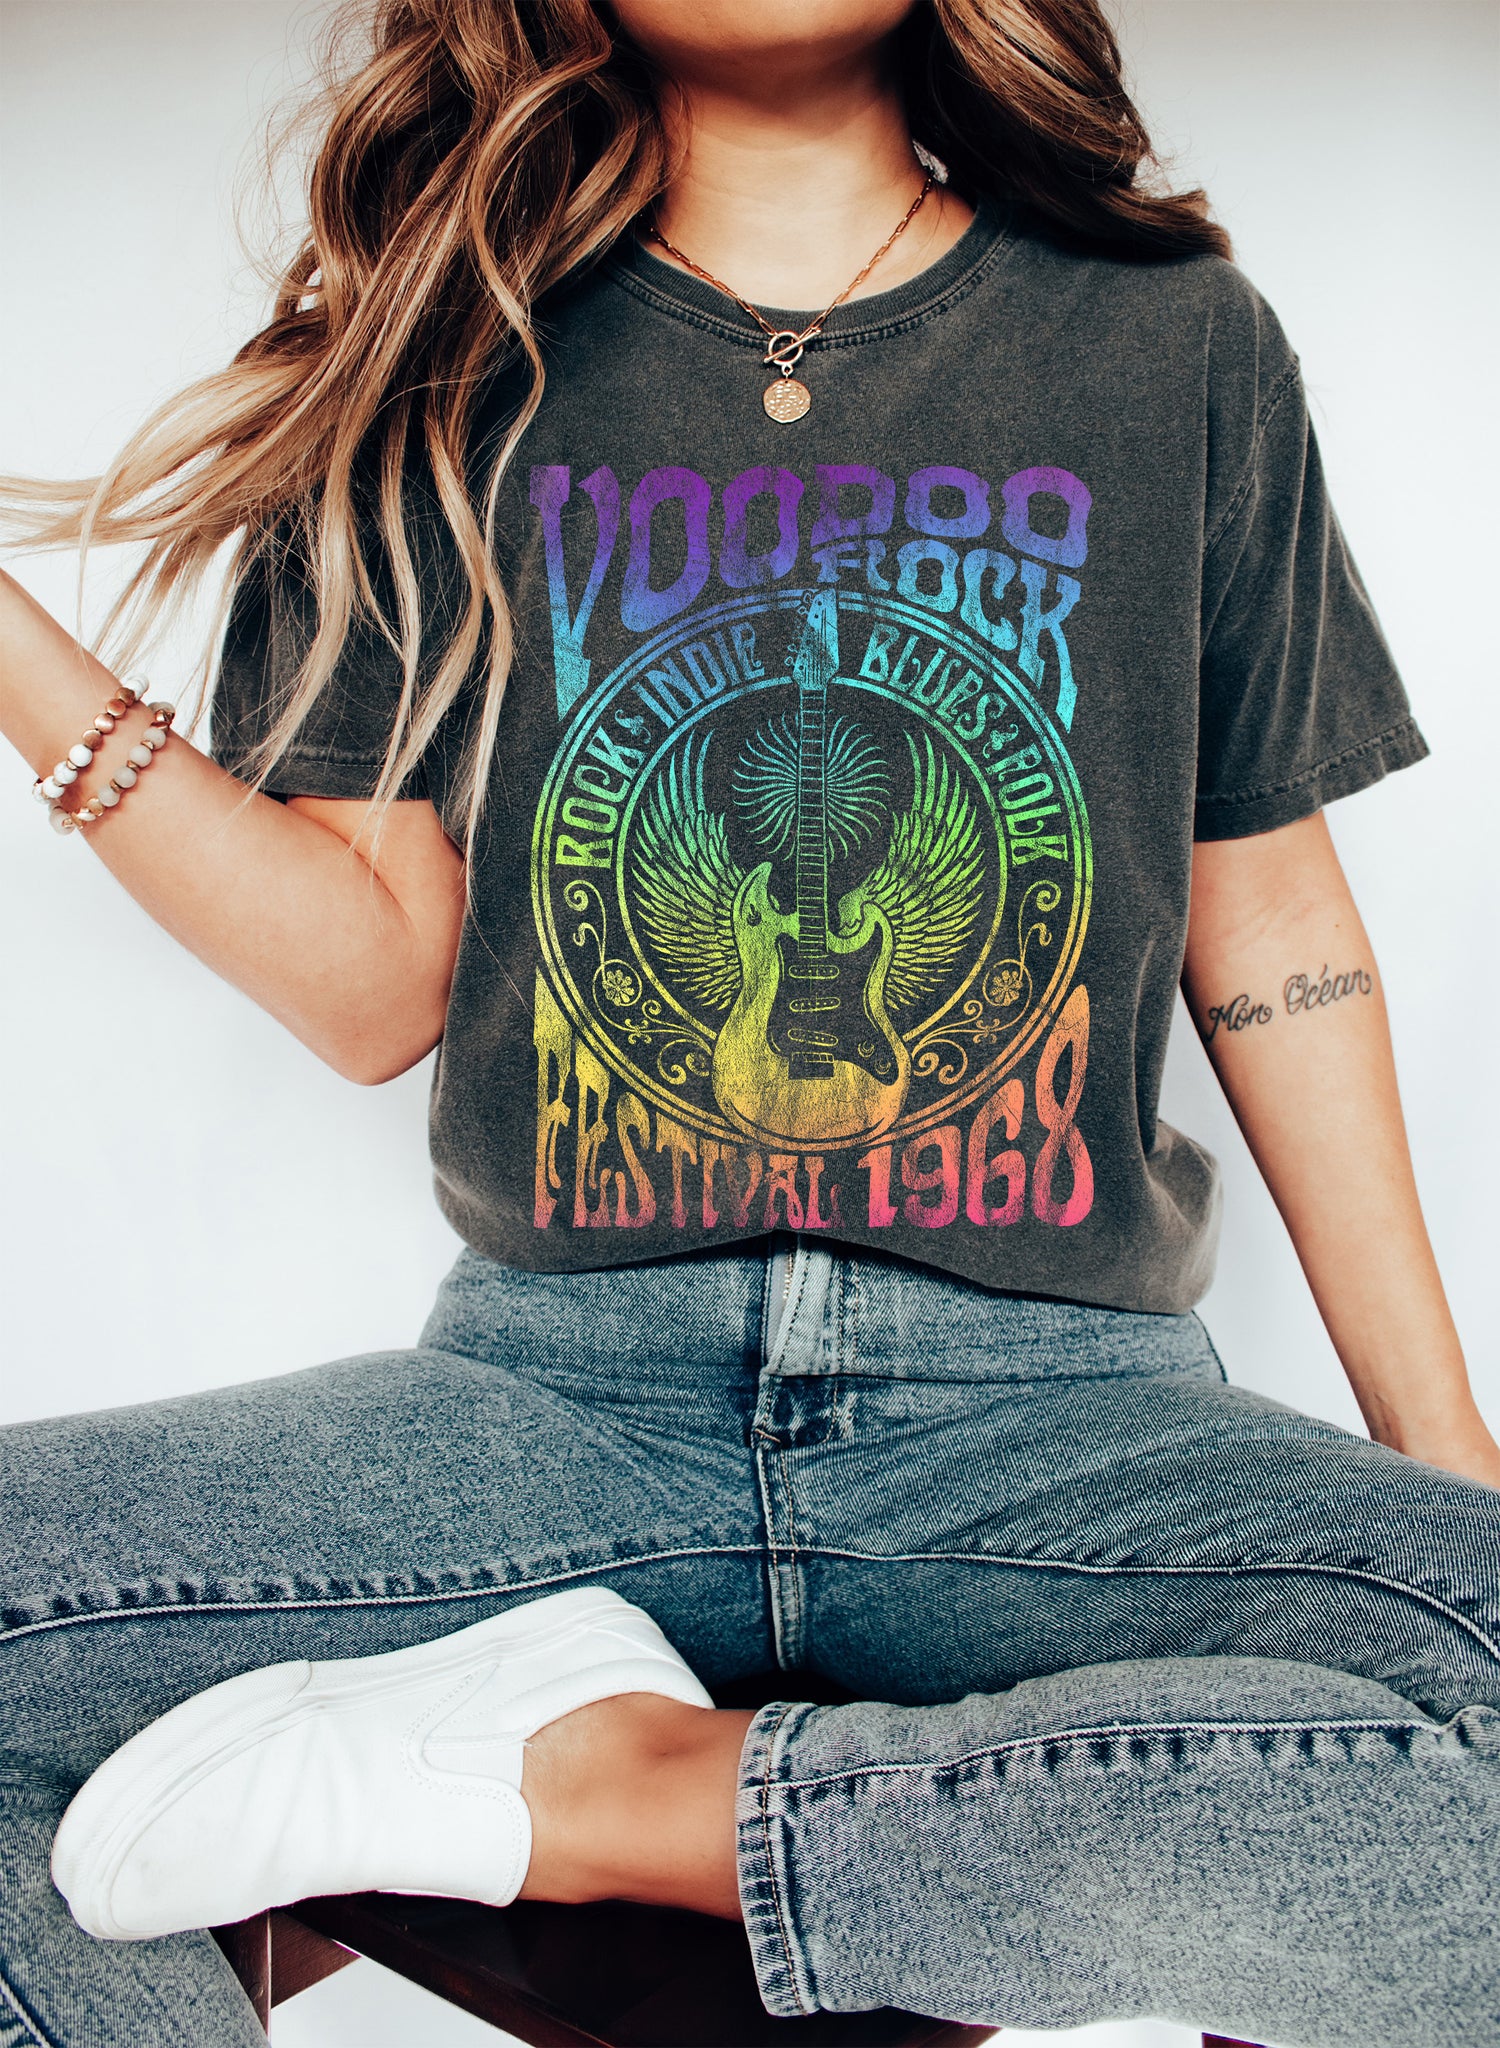 Voodoo Rock Festival Vintage Retro Music T-Shirt